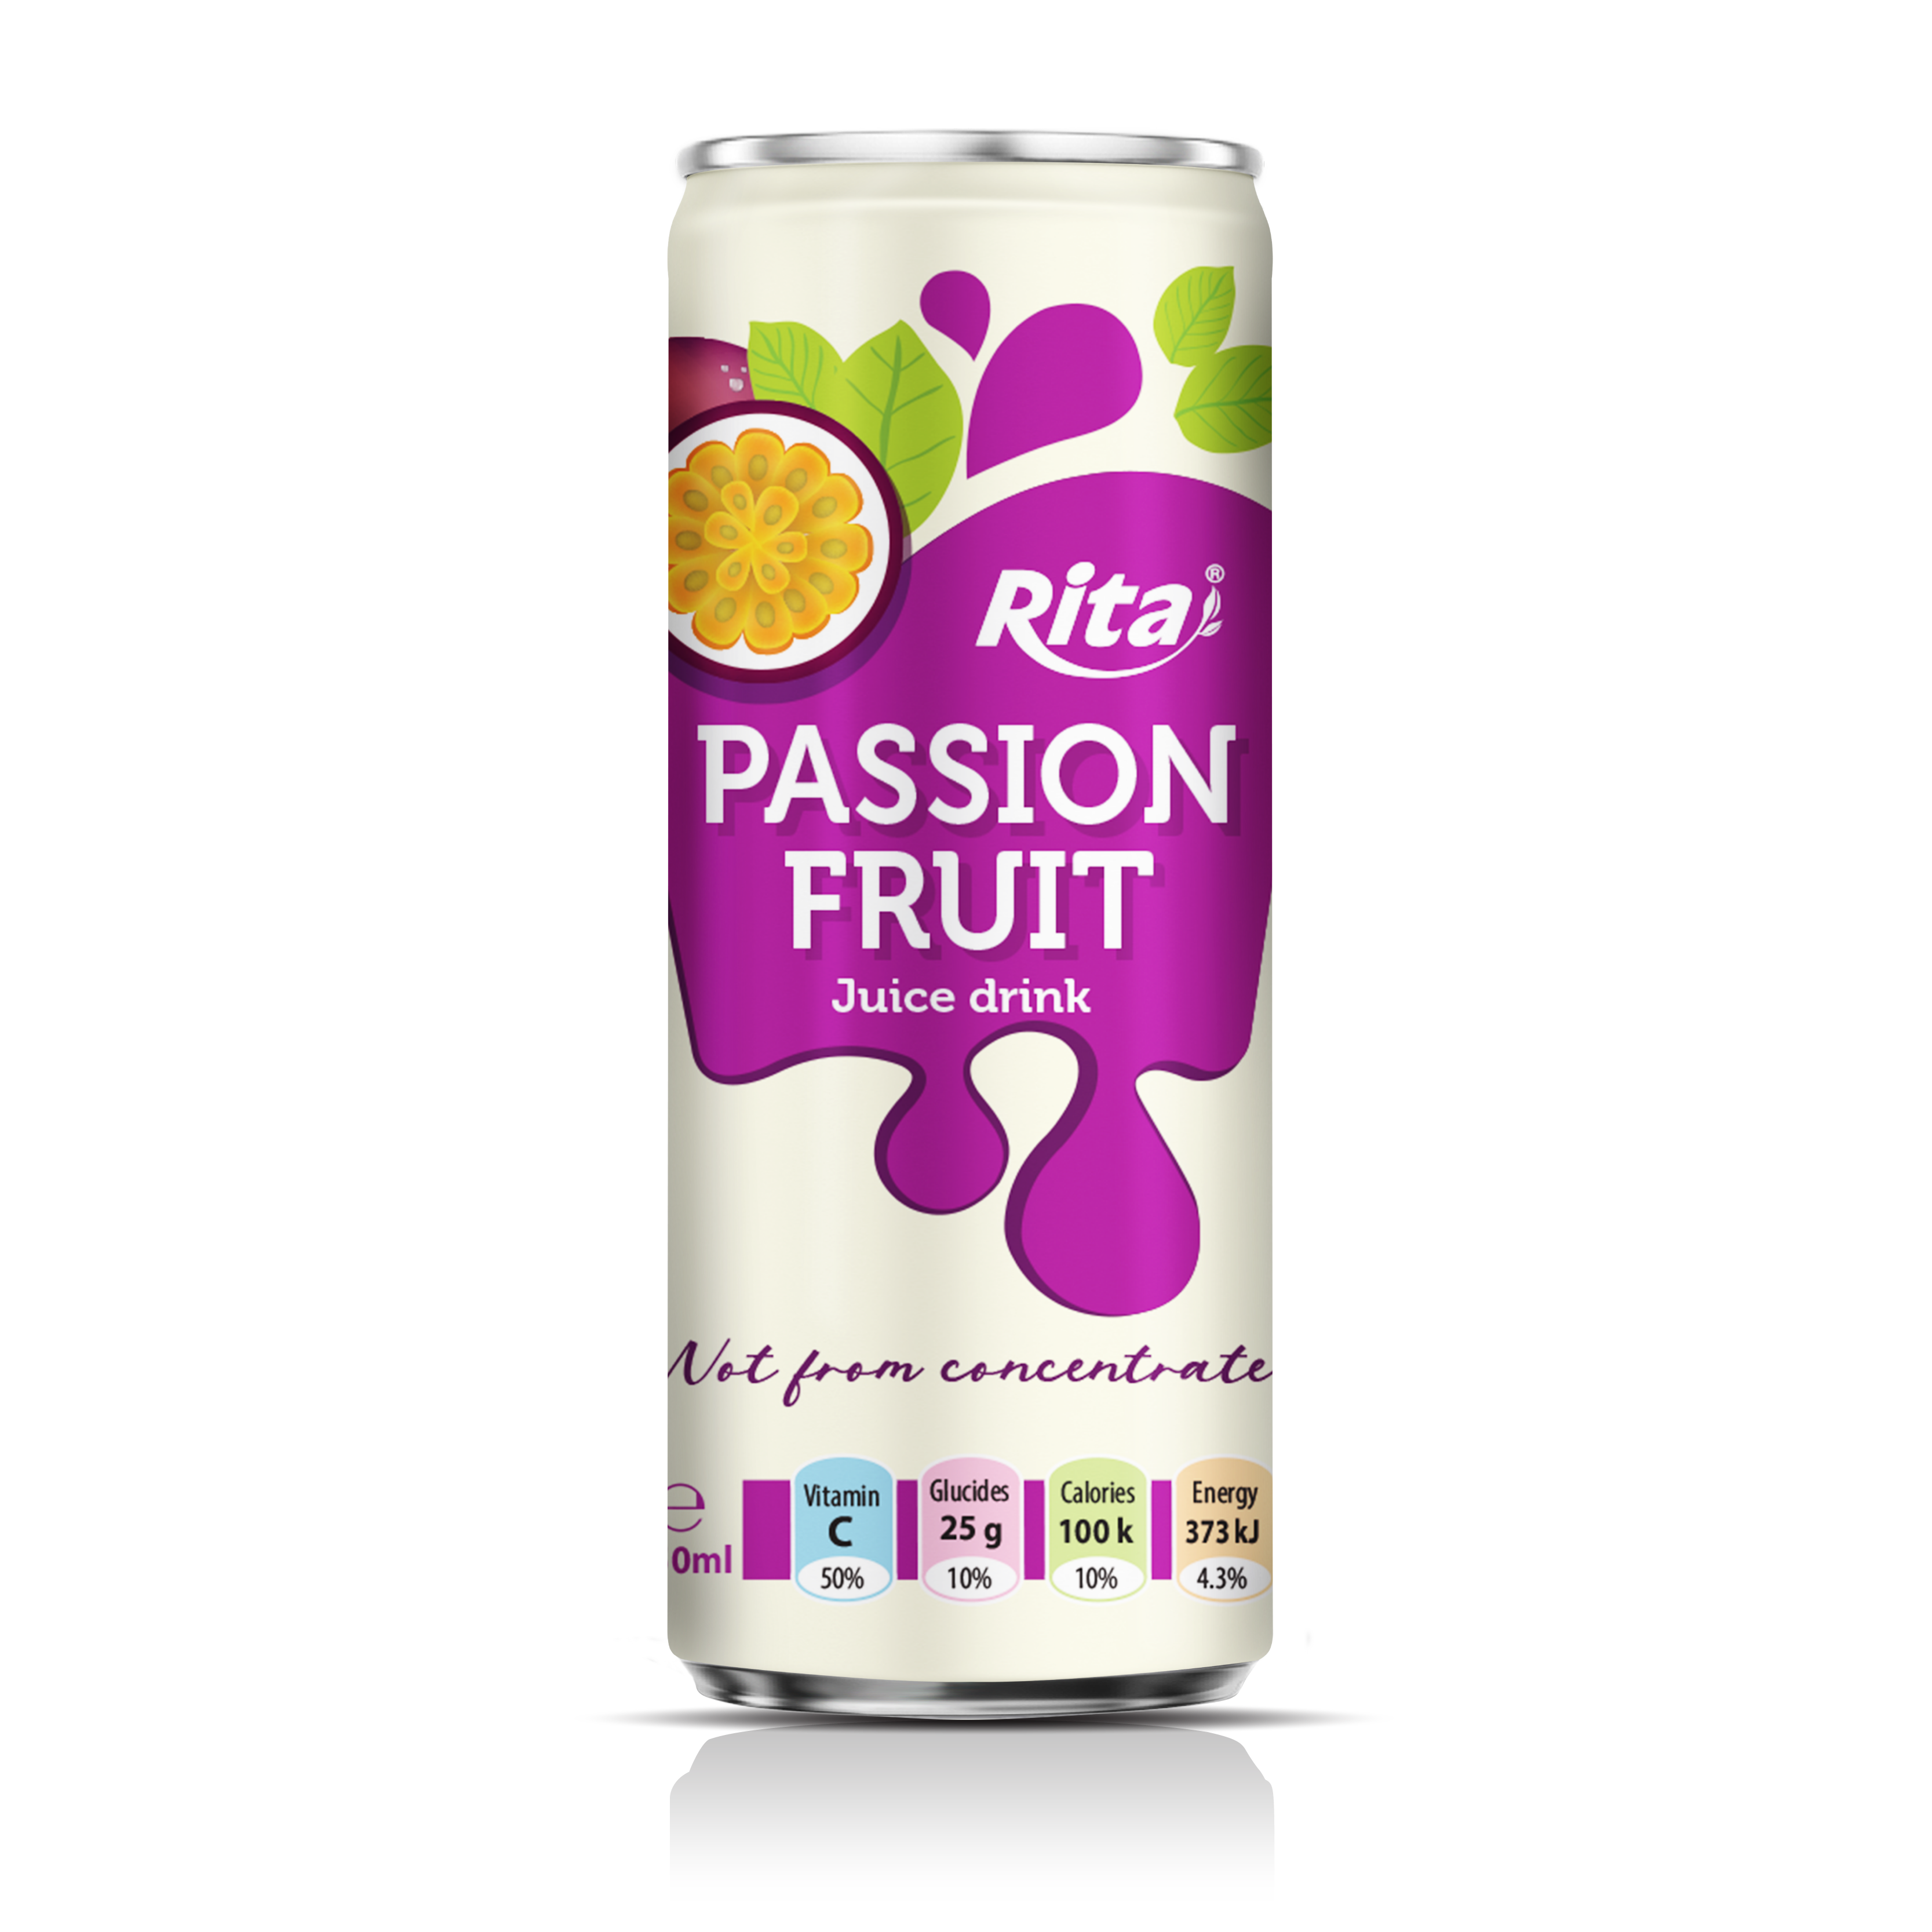 Best price OEM passion fruit fruit